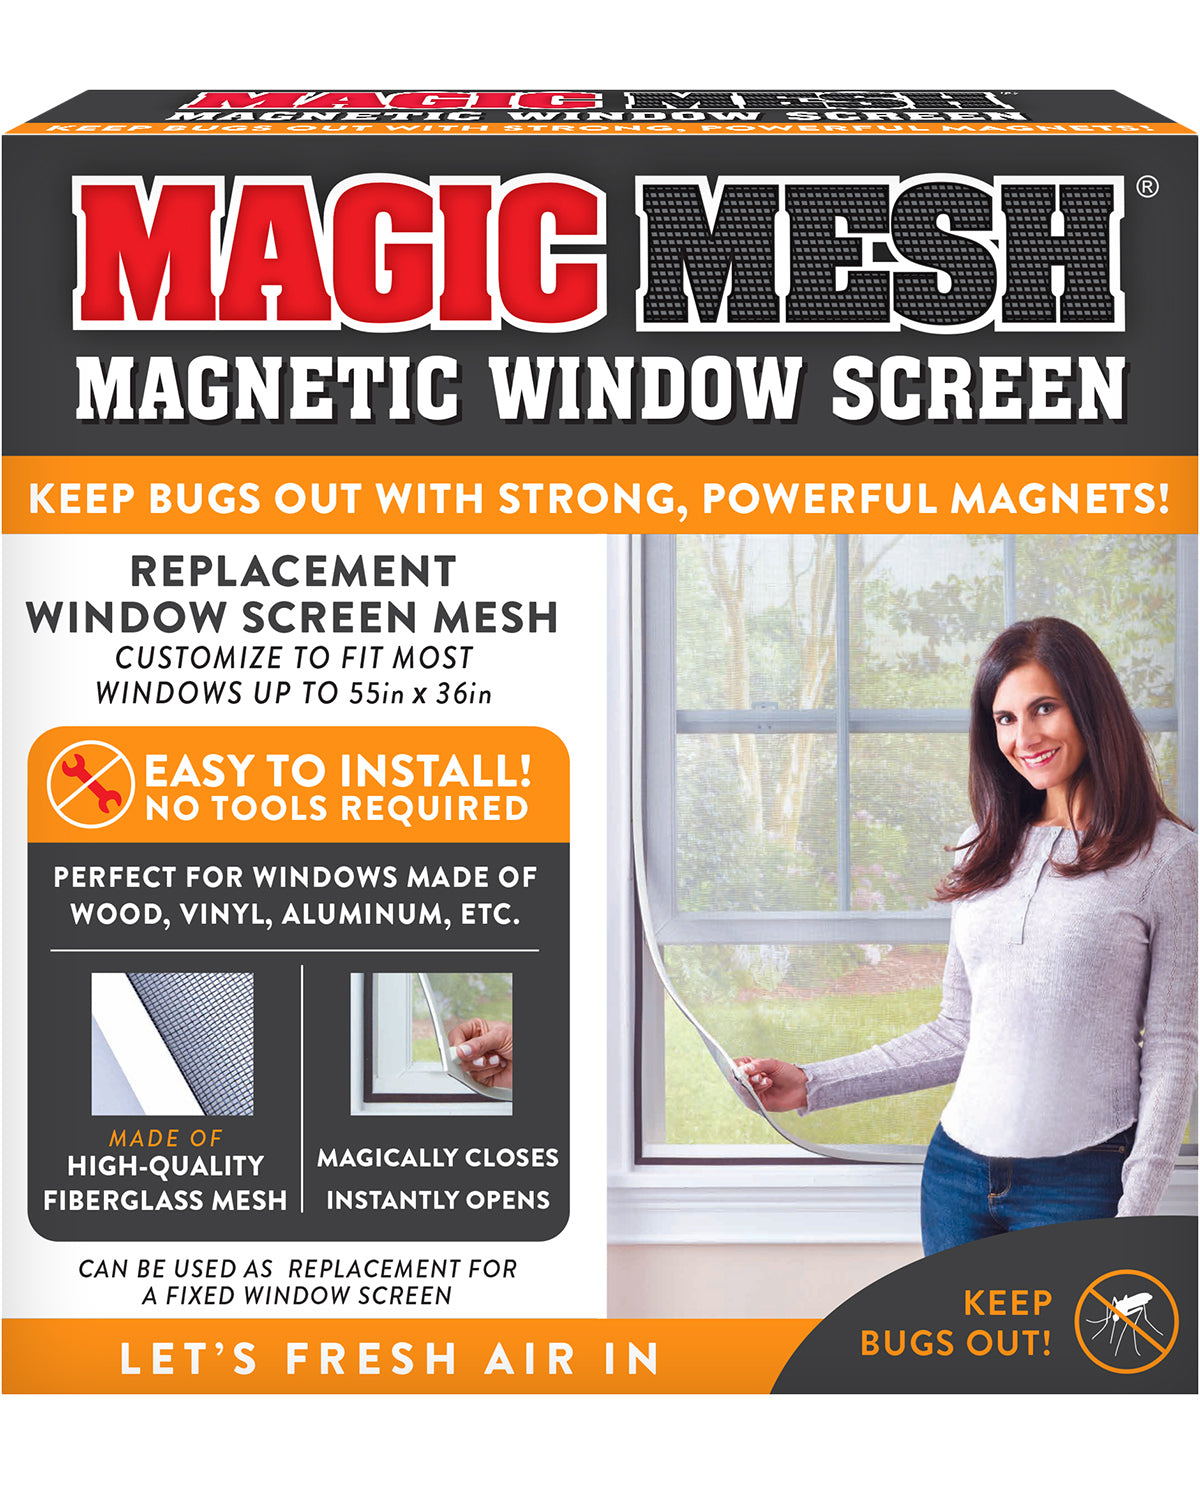 Magic Mesh Magnetic Window Screen